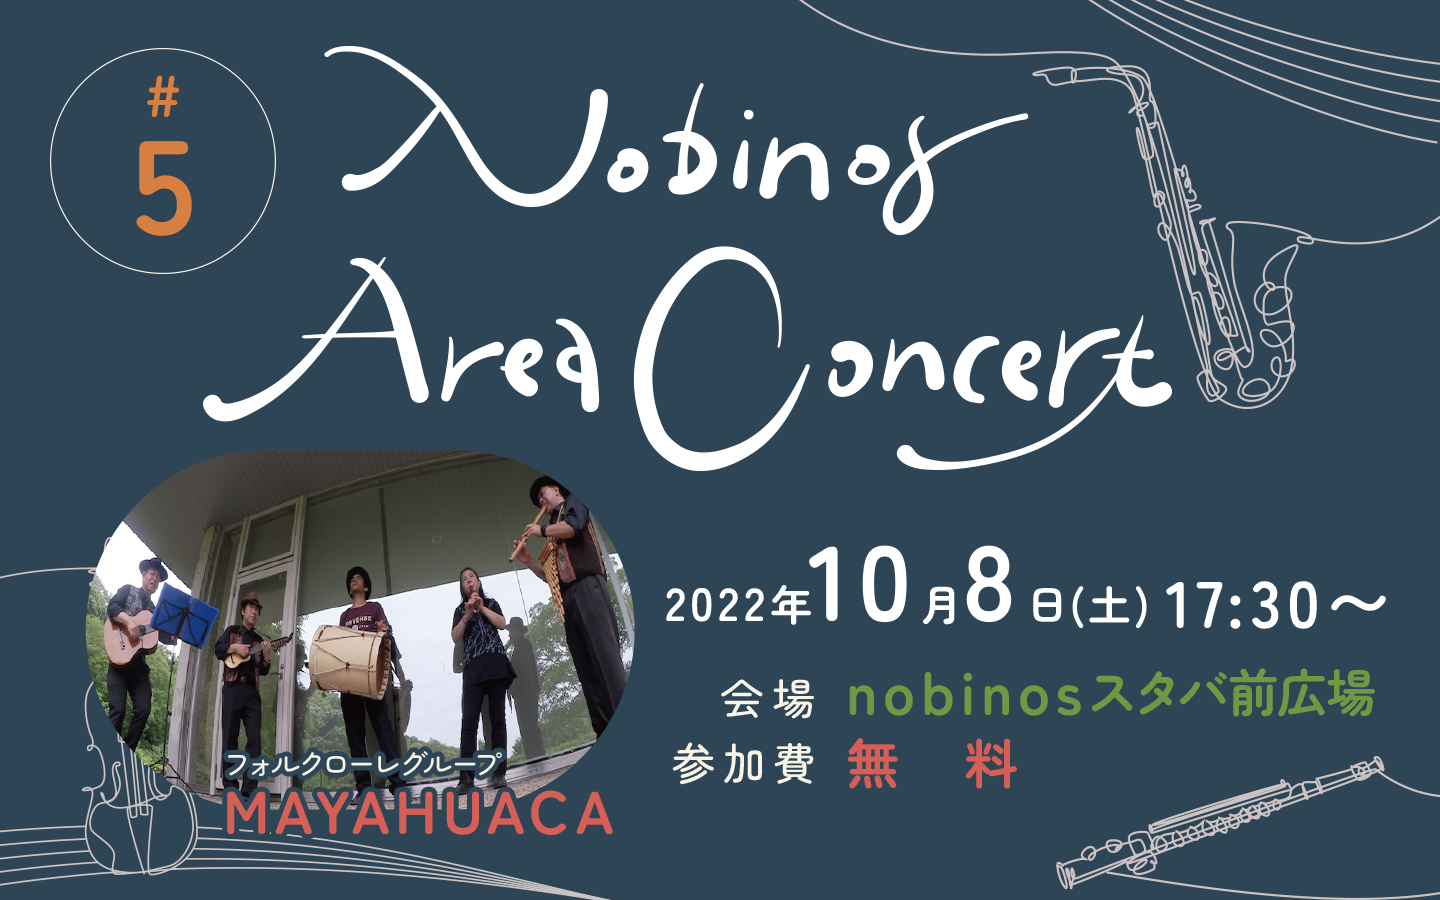 Nobinos Area Concert フォルクローレグループ 〜MAYAHUACA〜